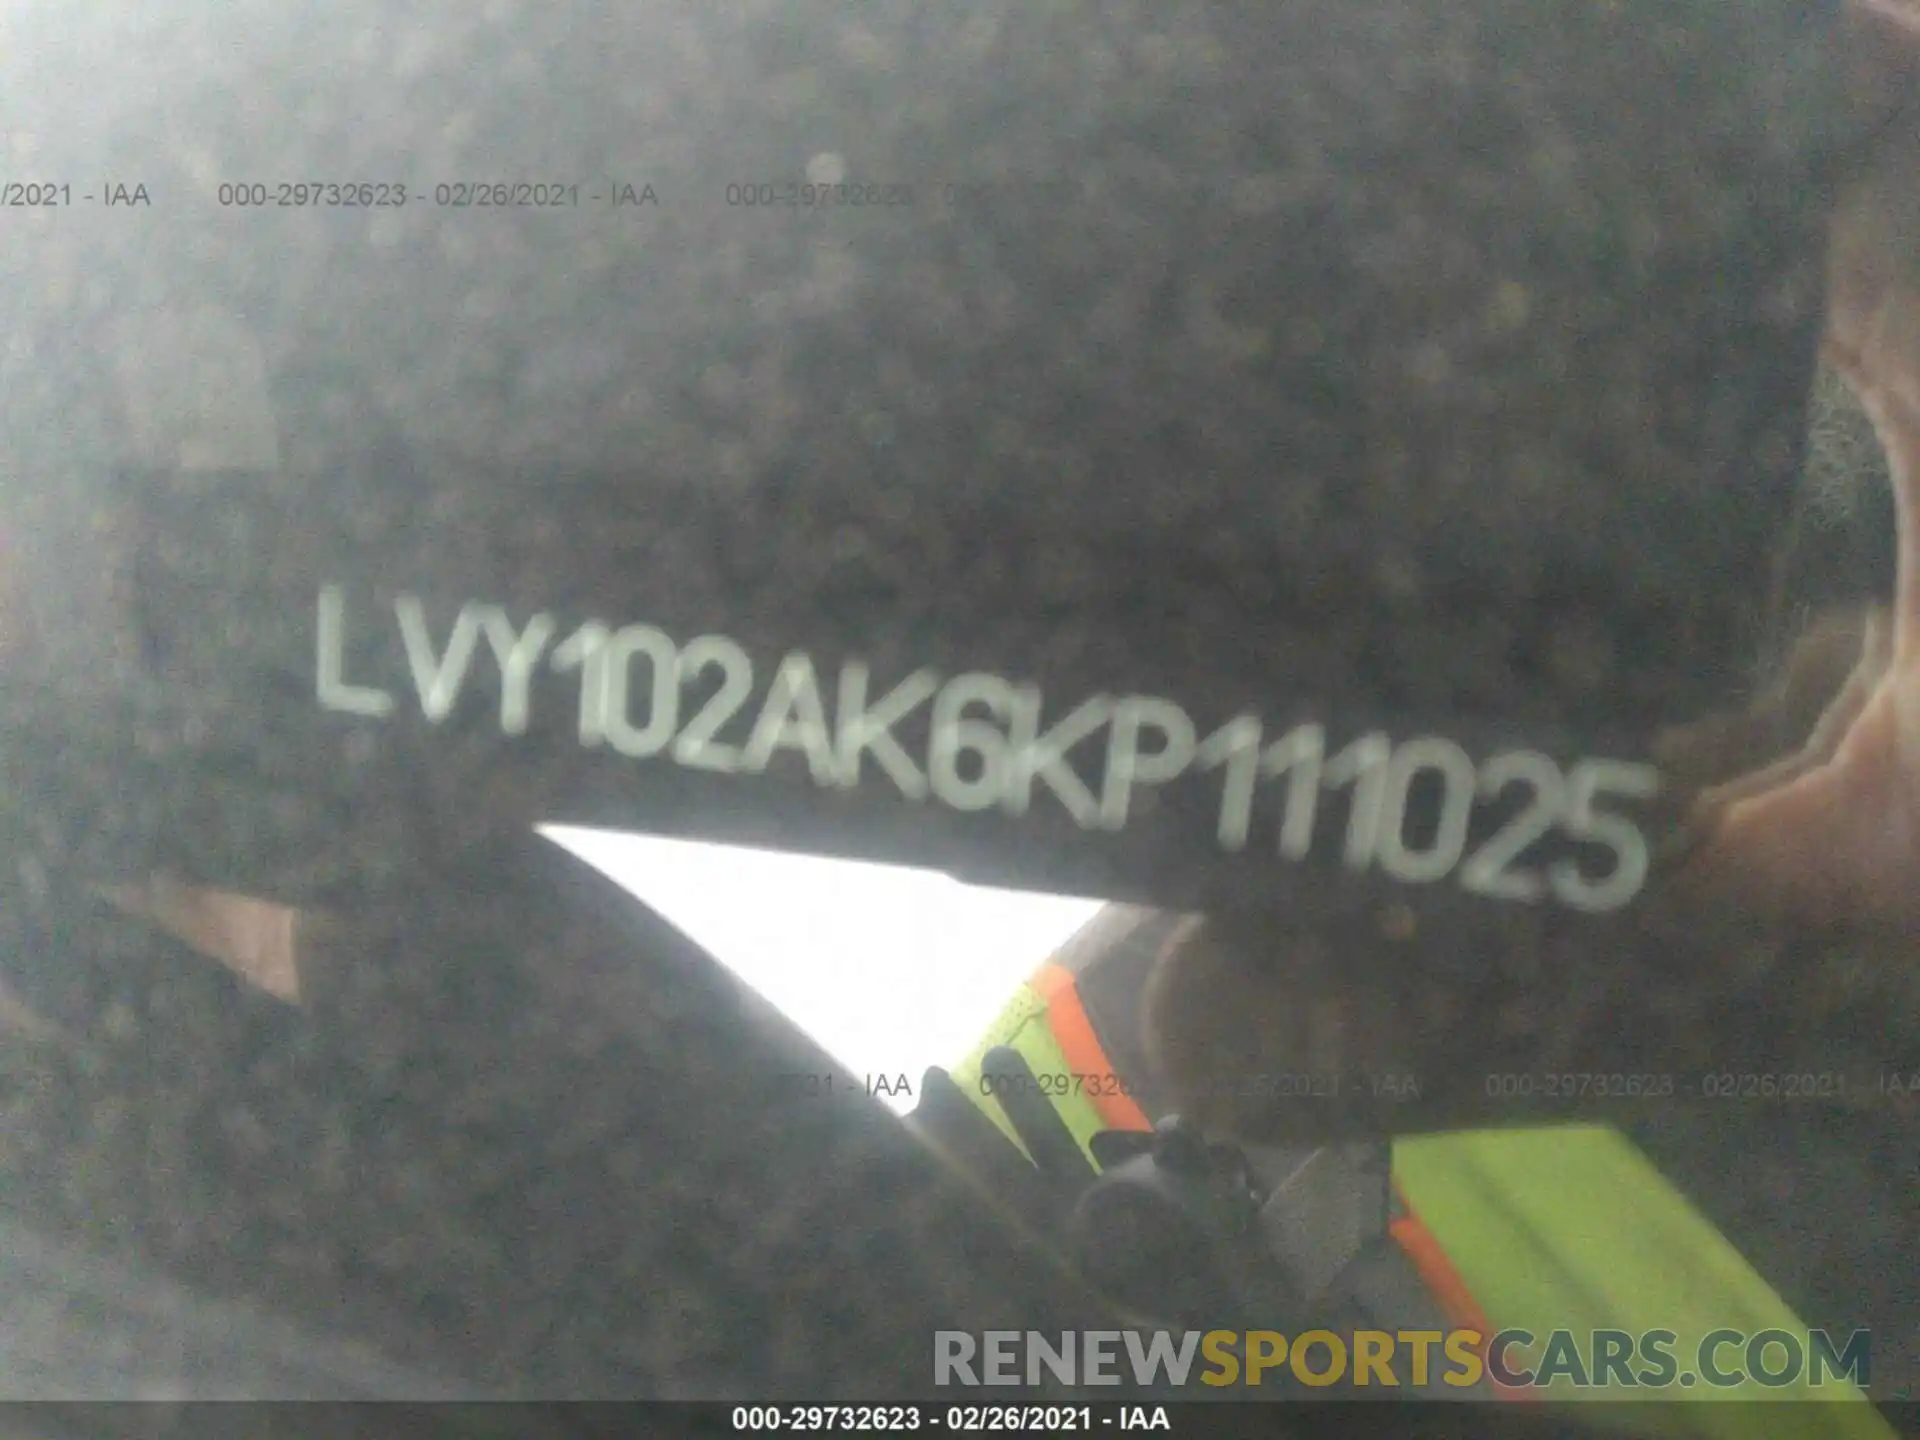 9 Photograph of a damaged car LVY102AK6KP111025 VOLVO S90 2019